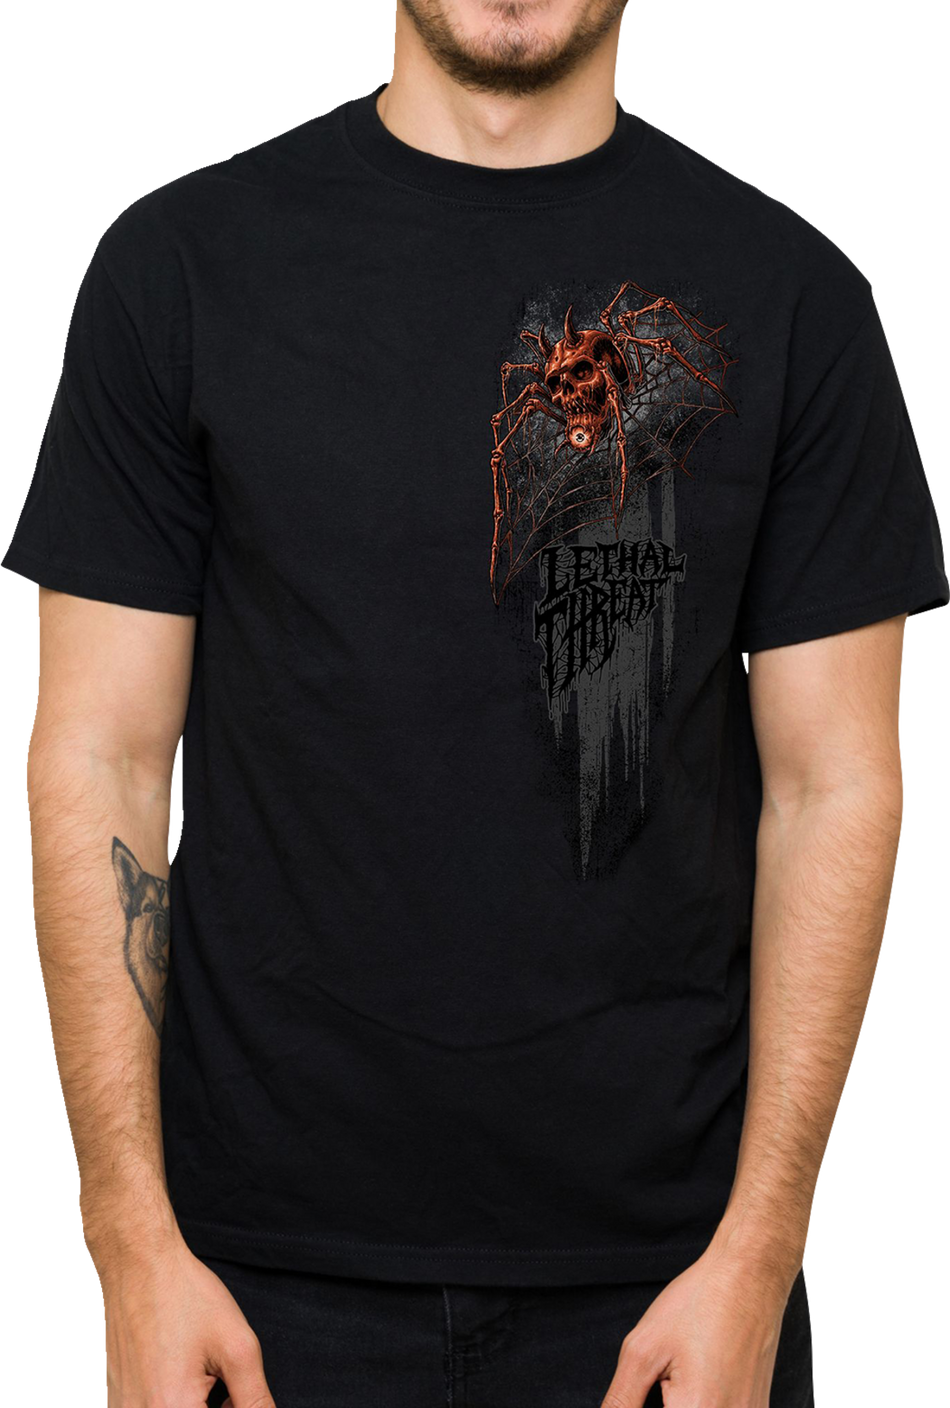 LETHAL THREAT Know Your Darkness T-Shirt - Black - 3XL LT20902XXXL